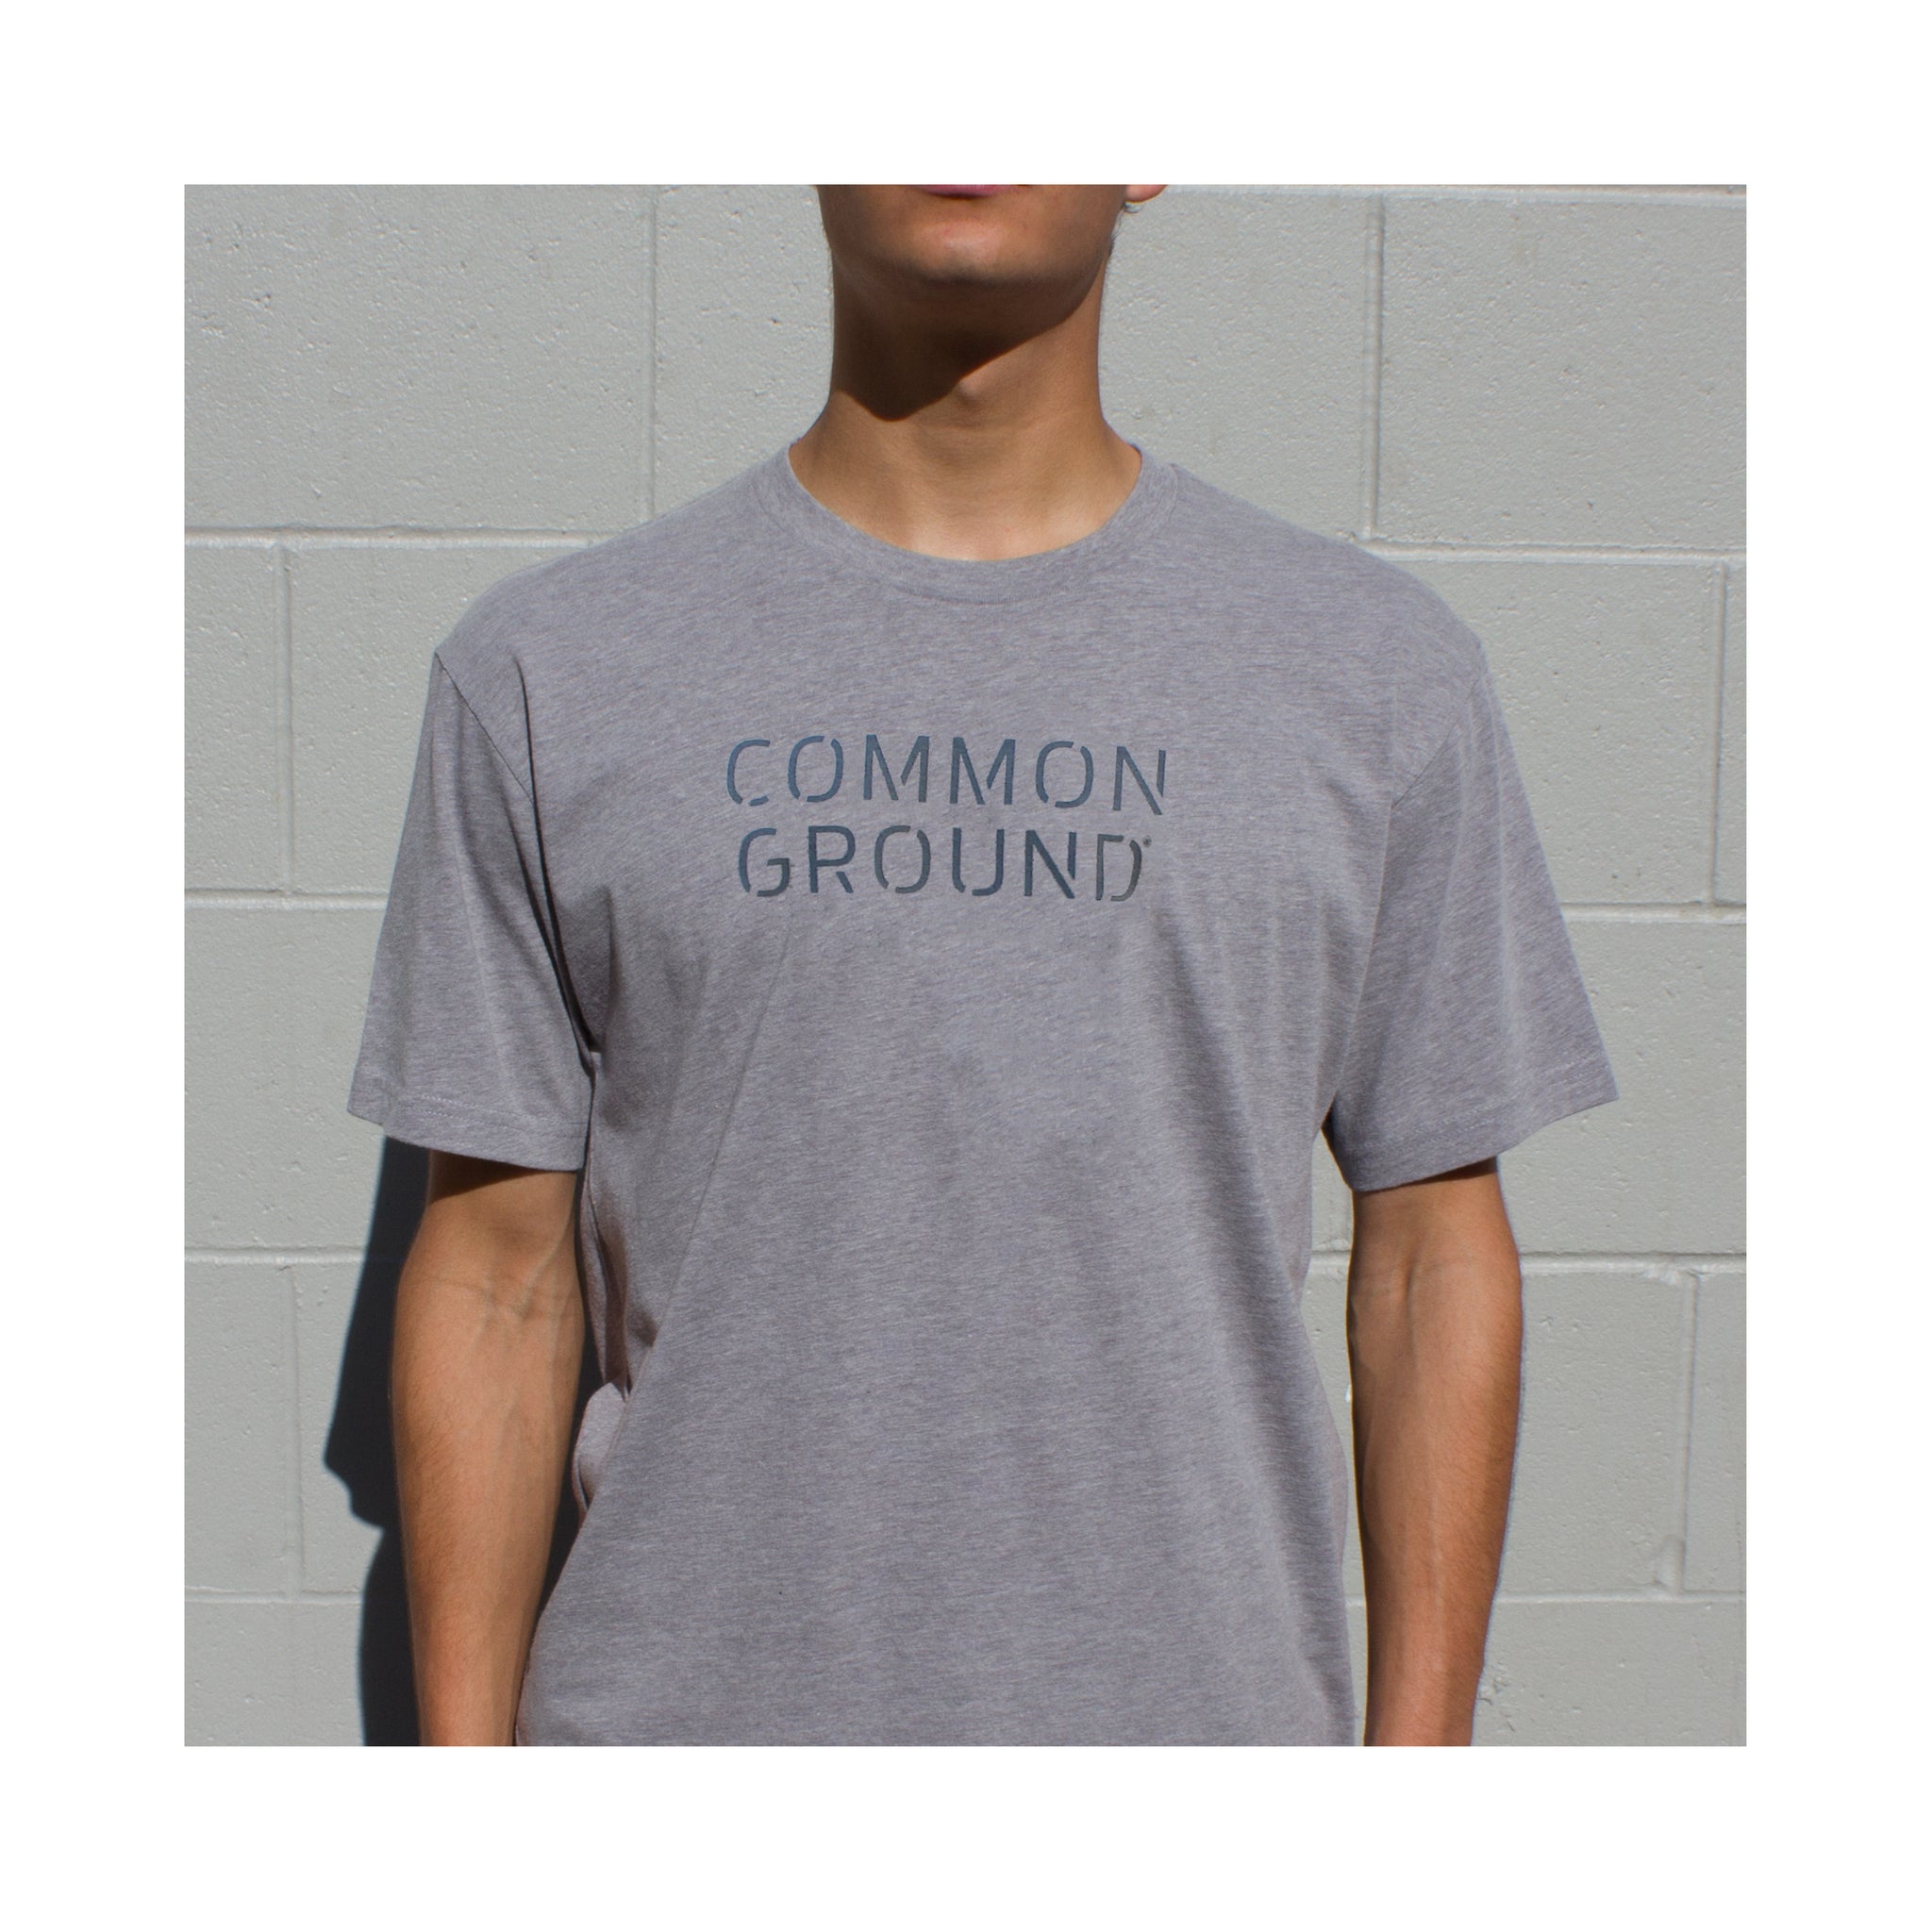 Dark_Heather_Gray - Common Ground T shirt Front on Model